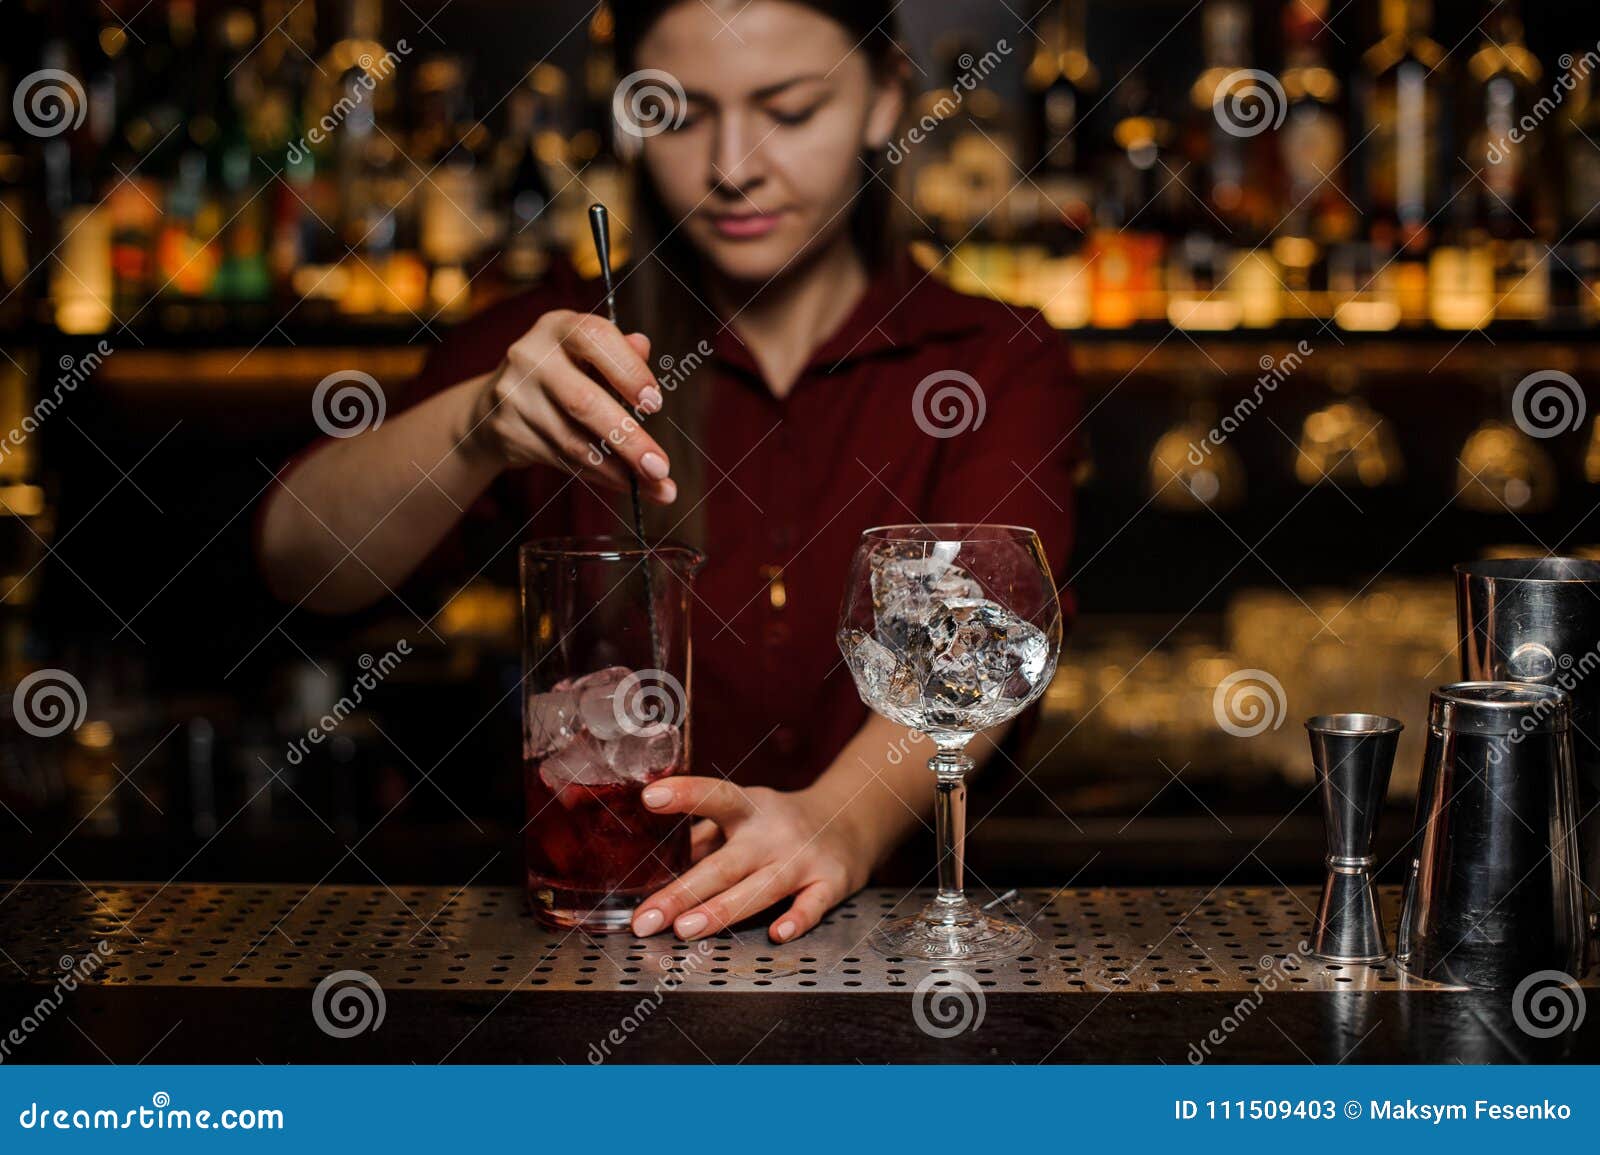 Bartender Girl Stiring a Fresh Light Red Cocktail Stock Image - Image ...